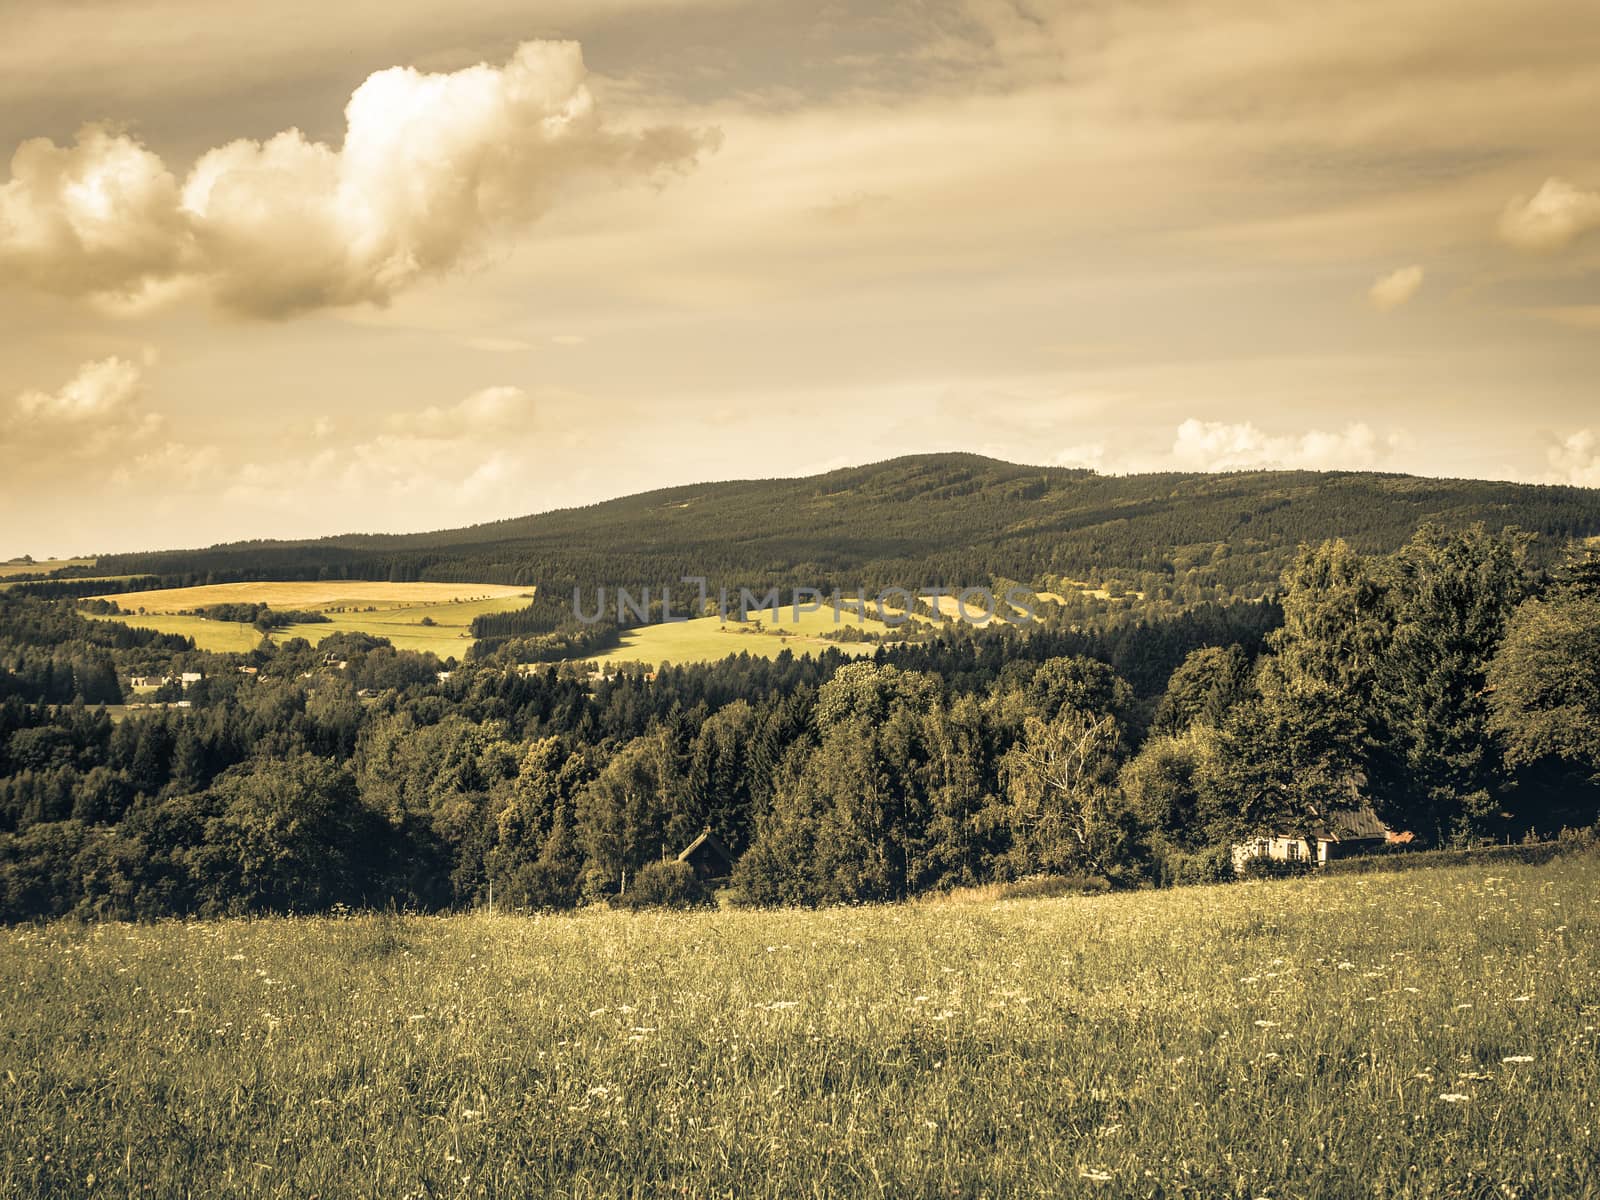 European countryside in summer, aged photo by weruskak